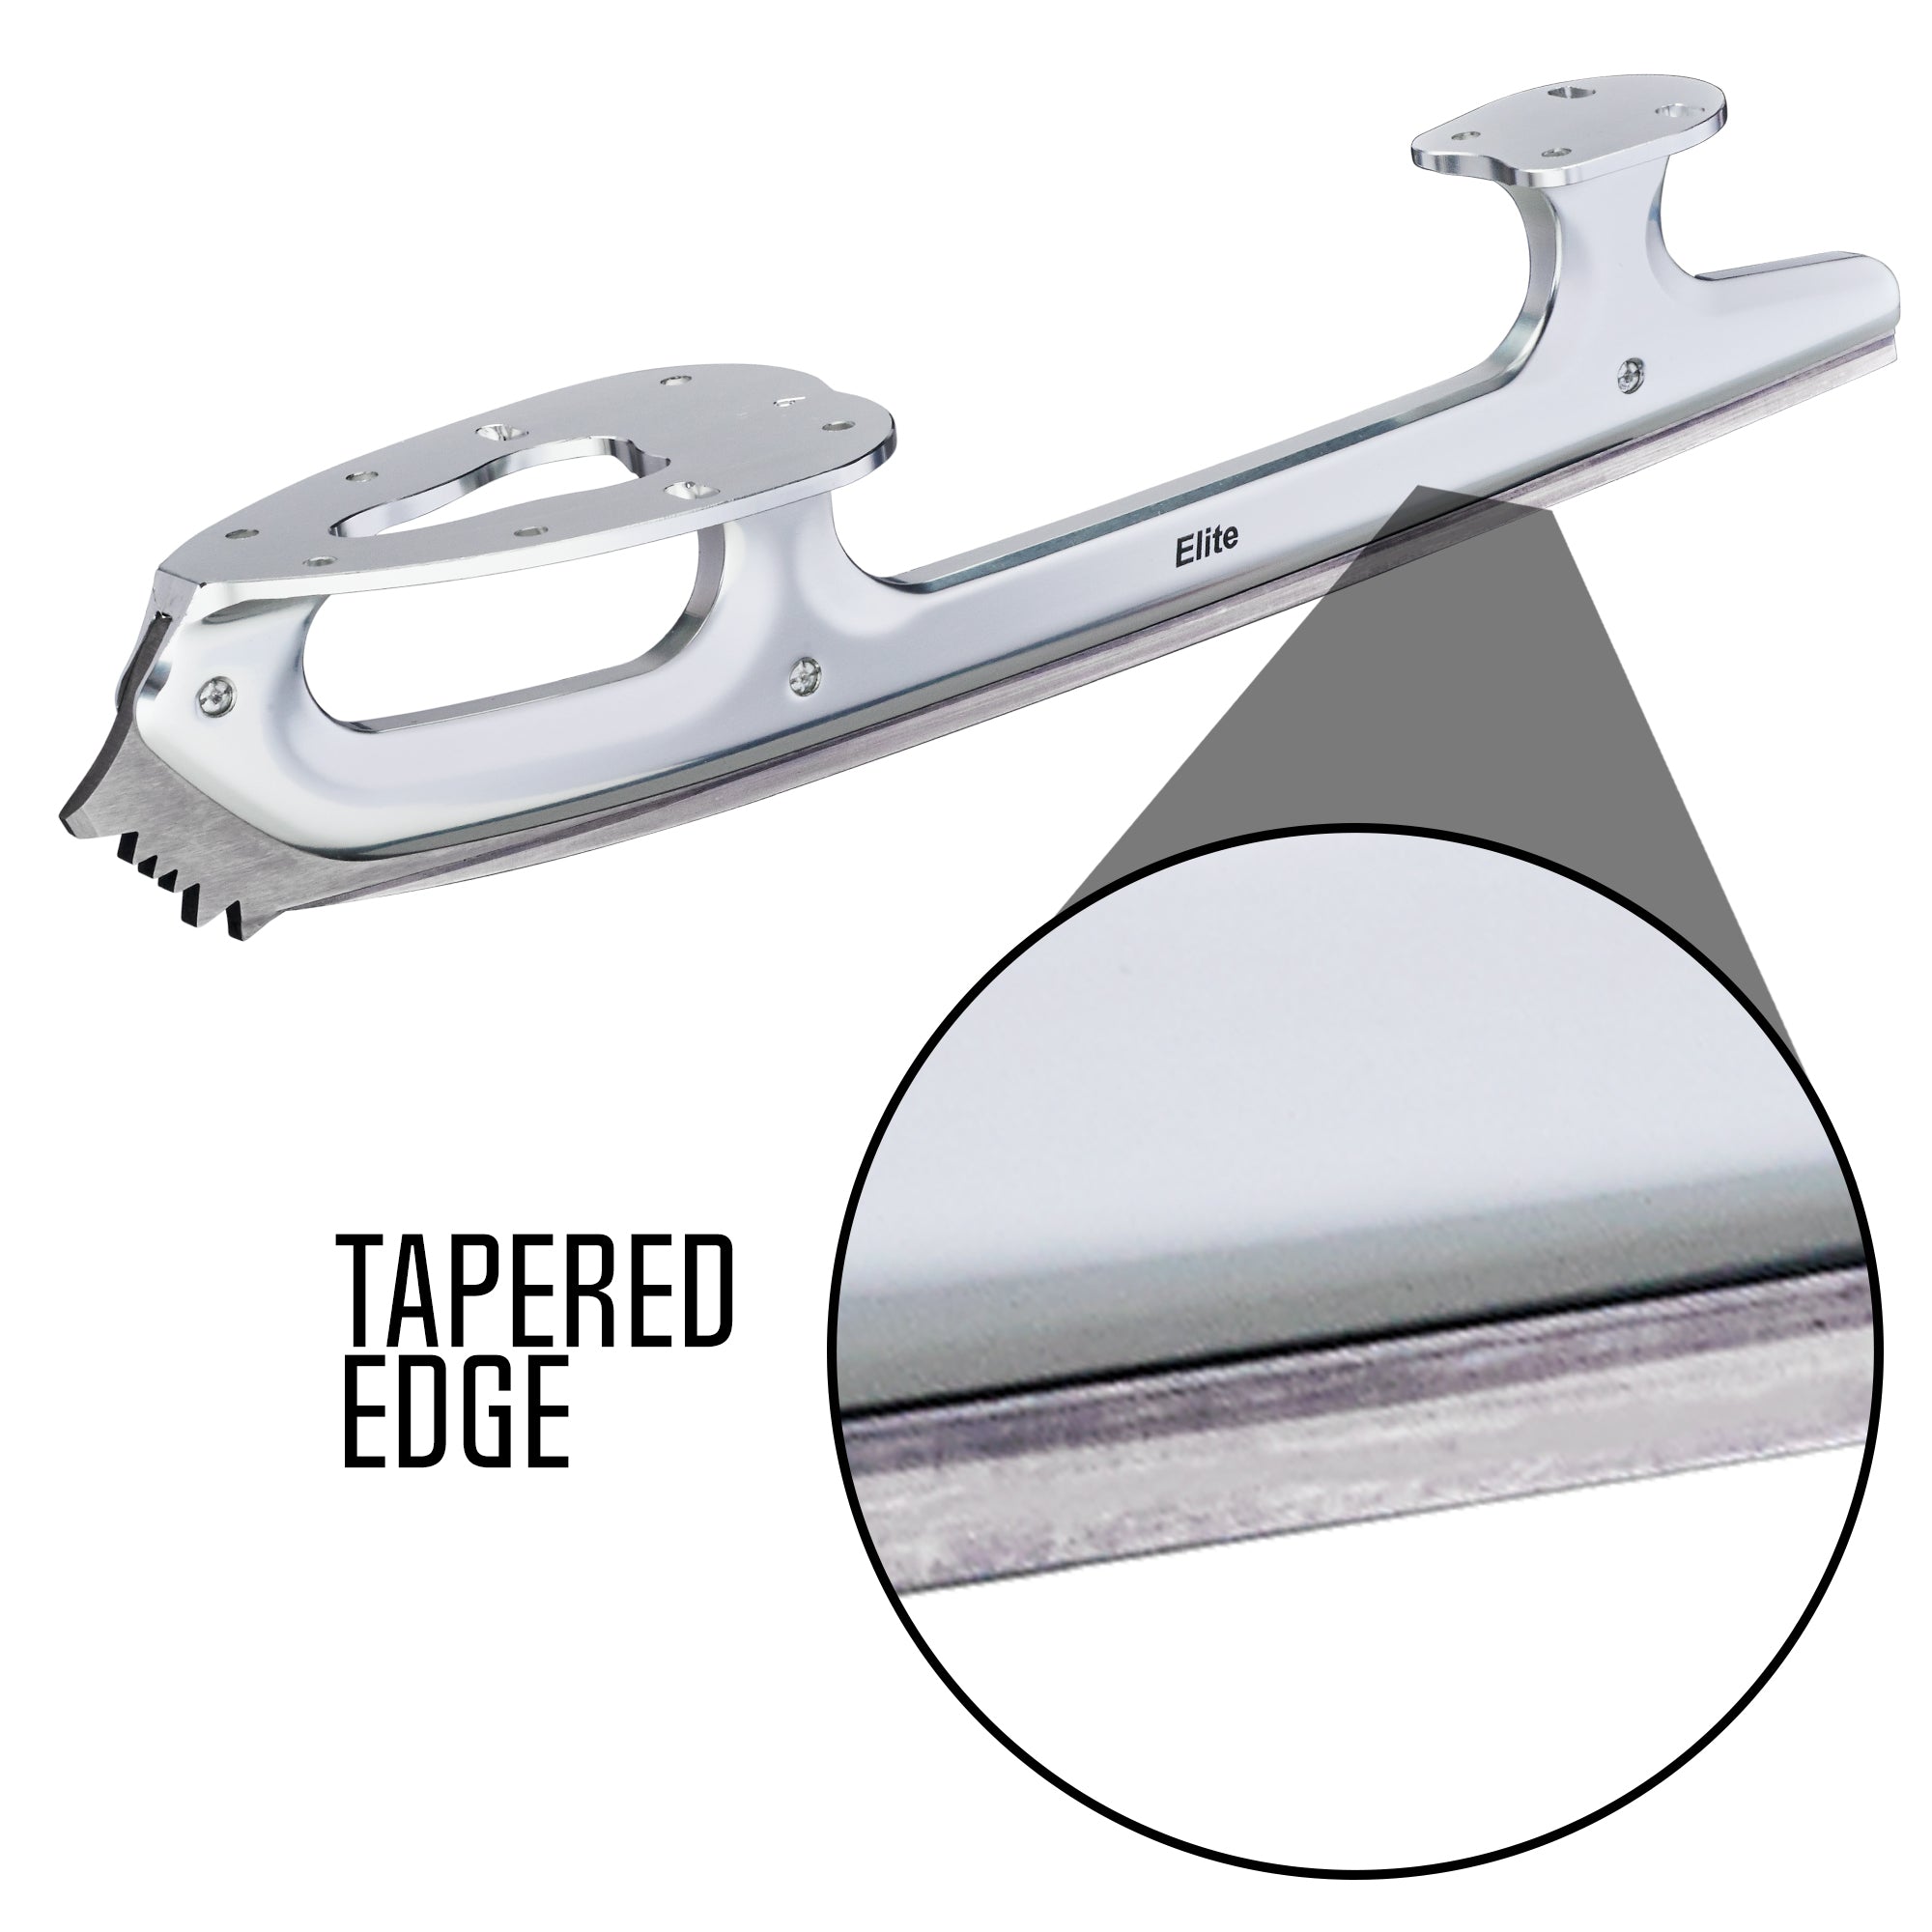 Matrix Elite blade aluminum chassis 33% lighter tapered edge AUS8 steel blade